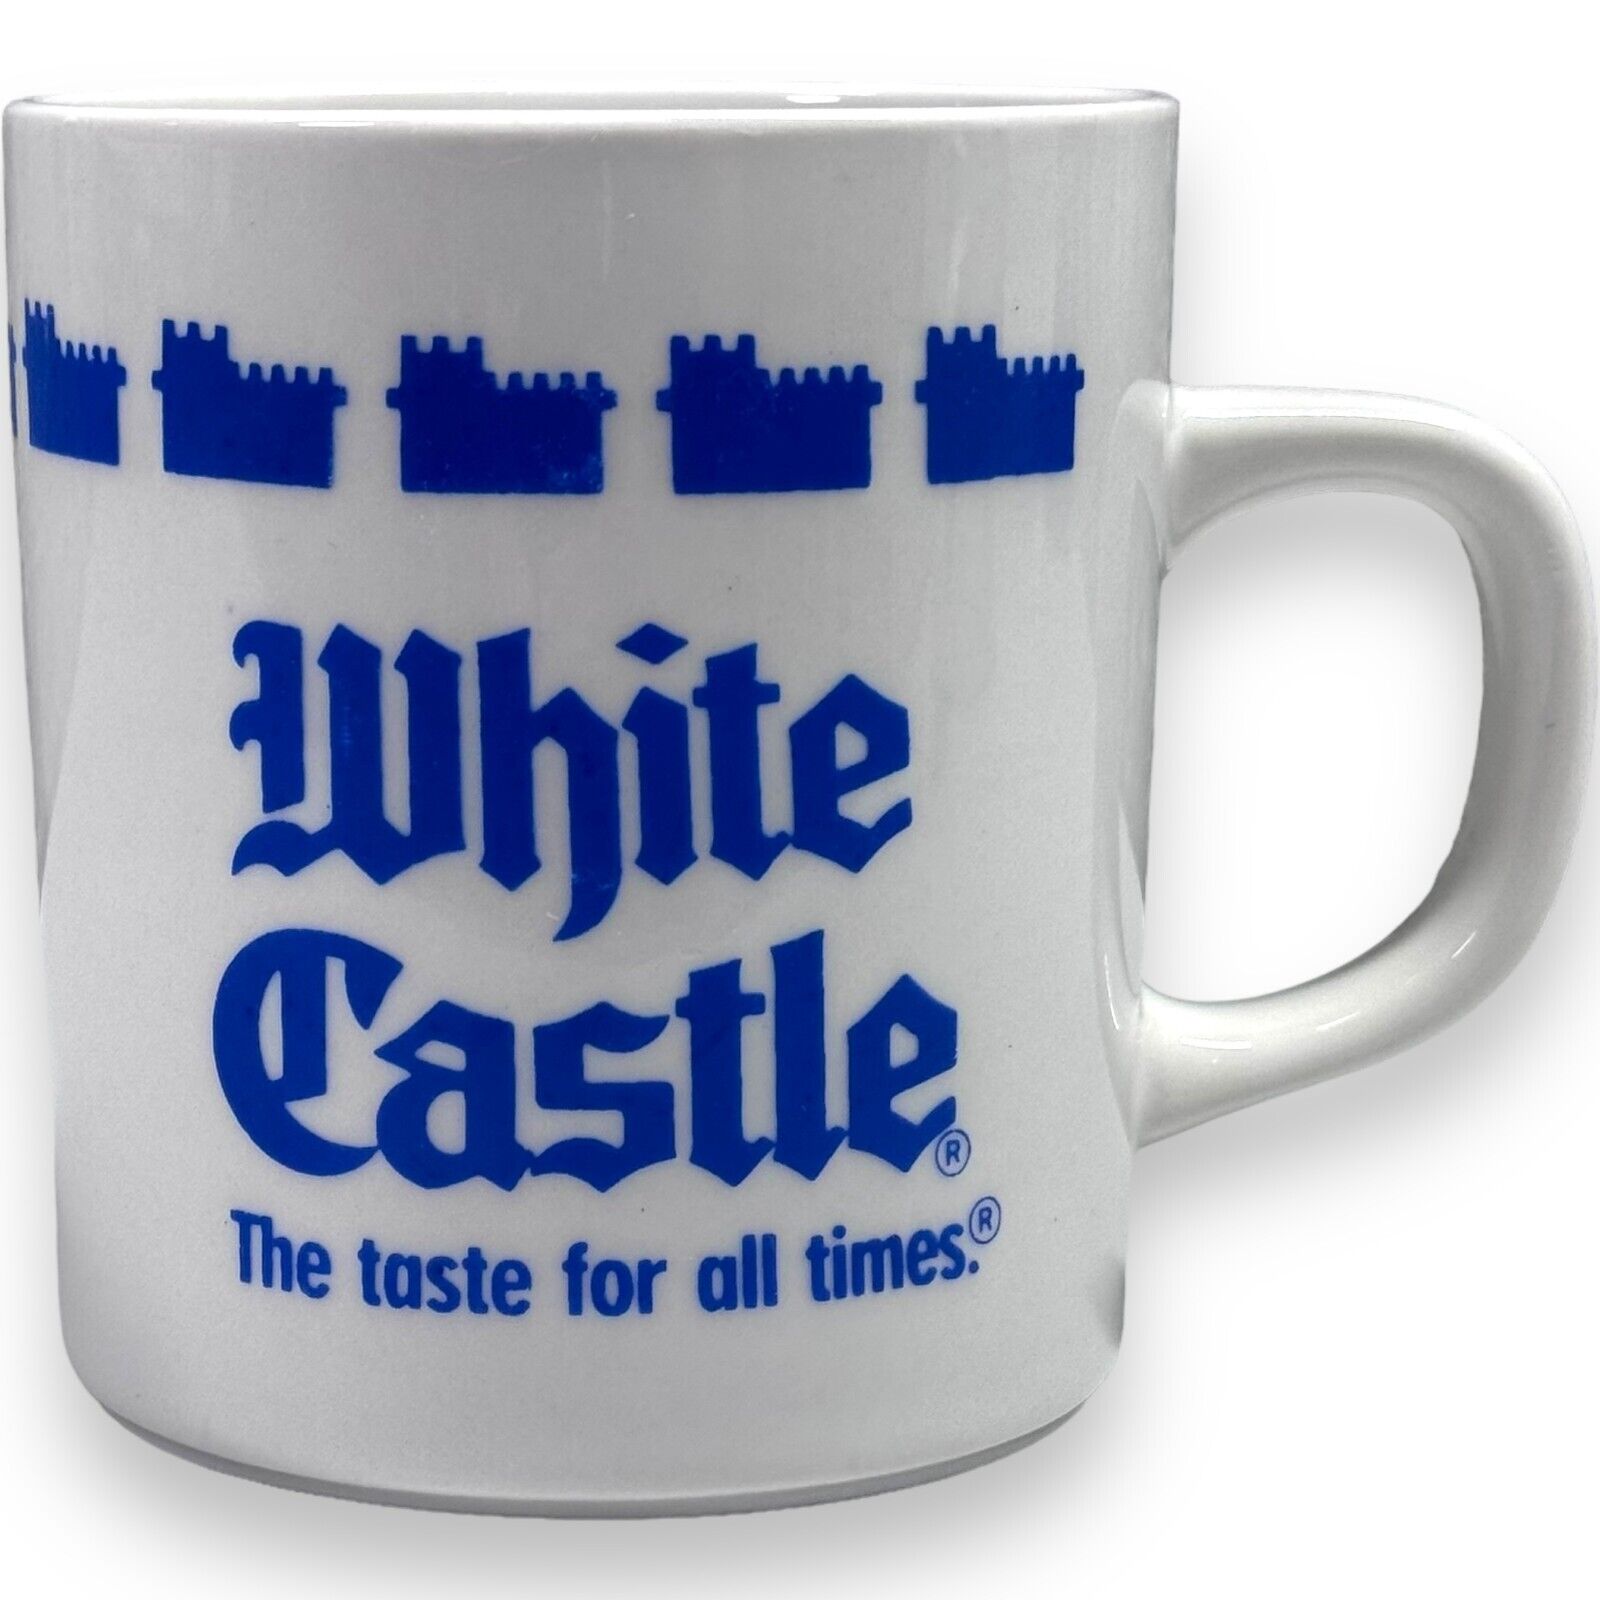 Vintage White Castle Coffee Mug Cup \